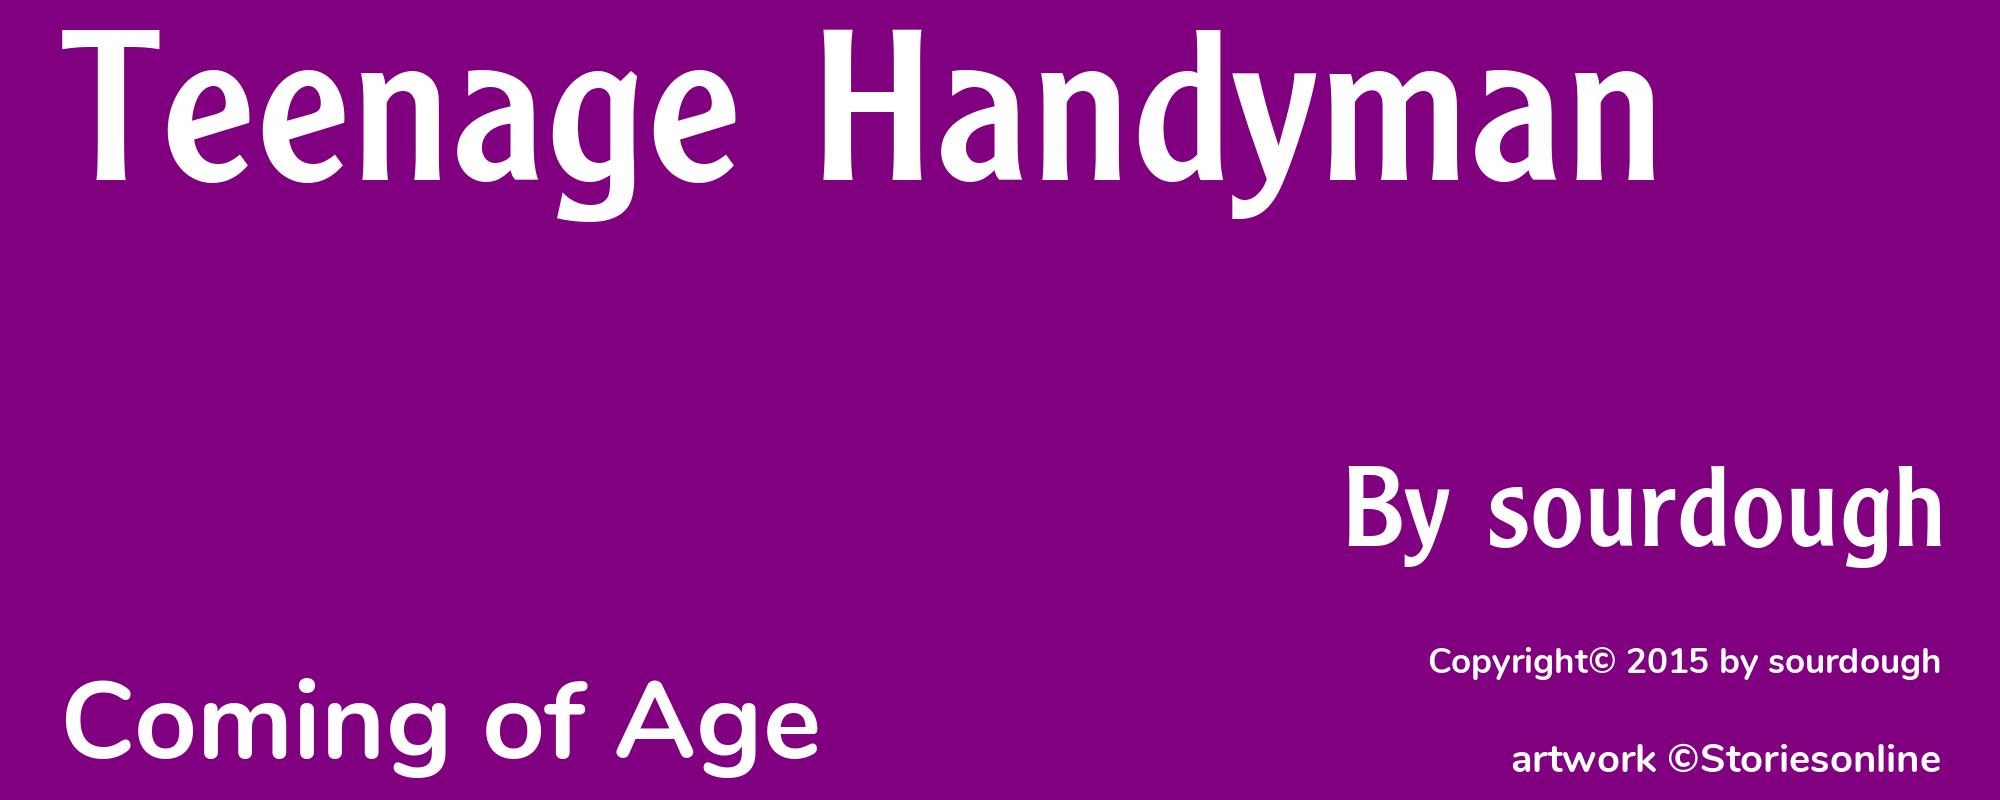 Teenage Handyman - Cover